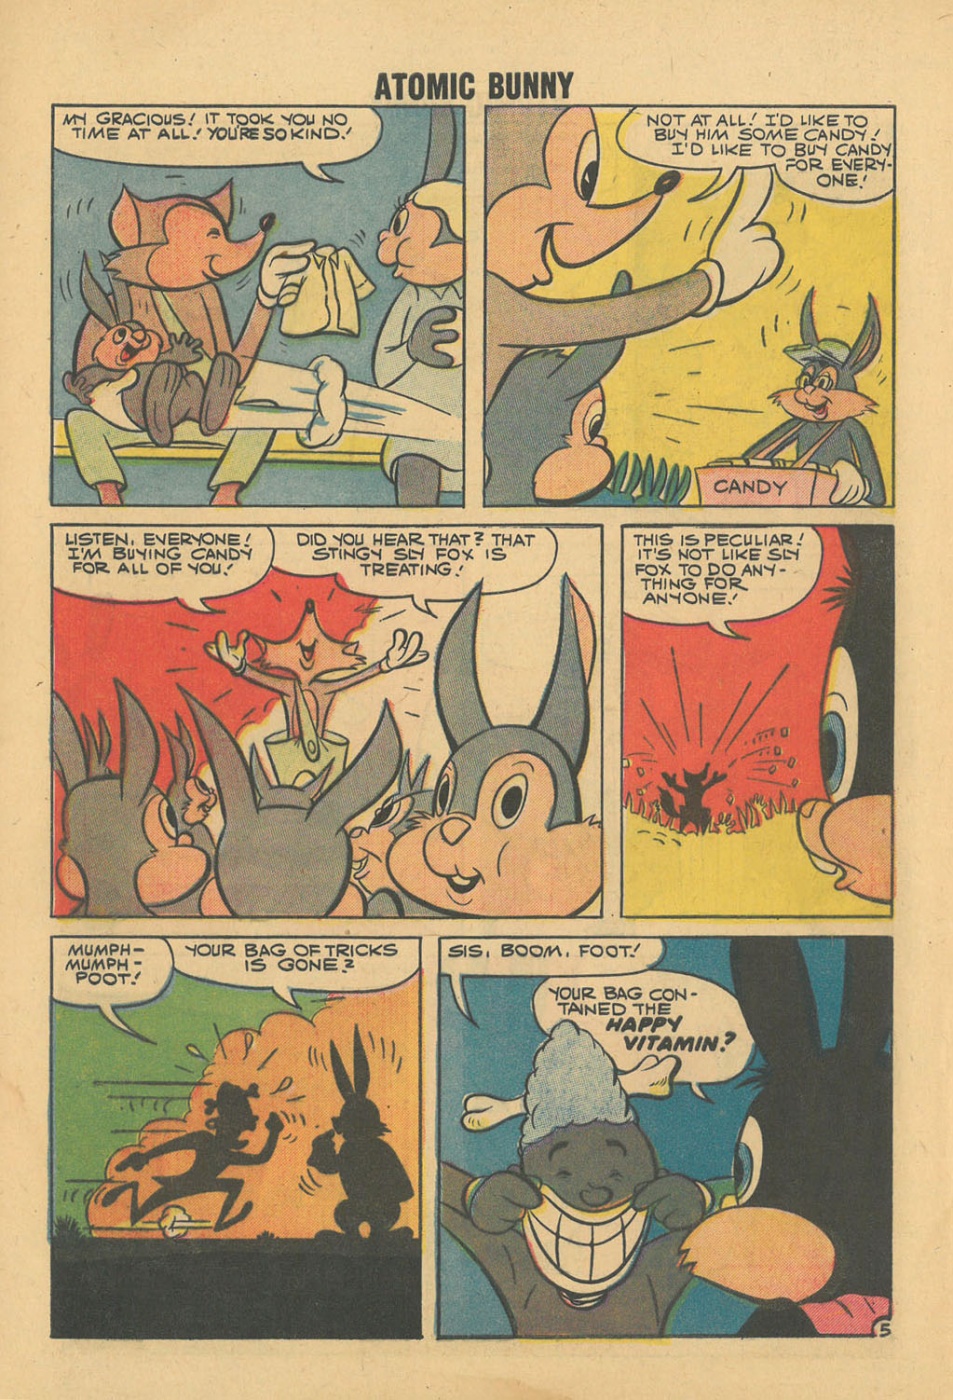 Atomic-Bunny-Comic-Strips (c) (8)